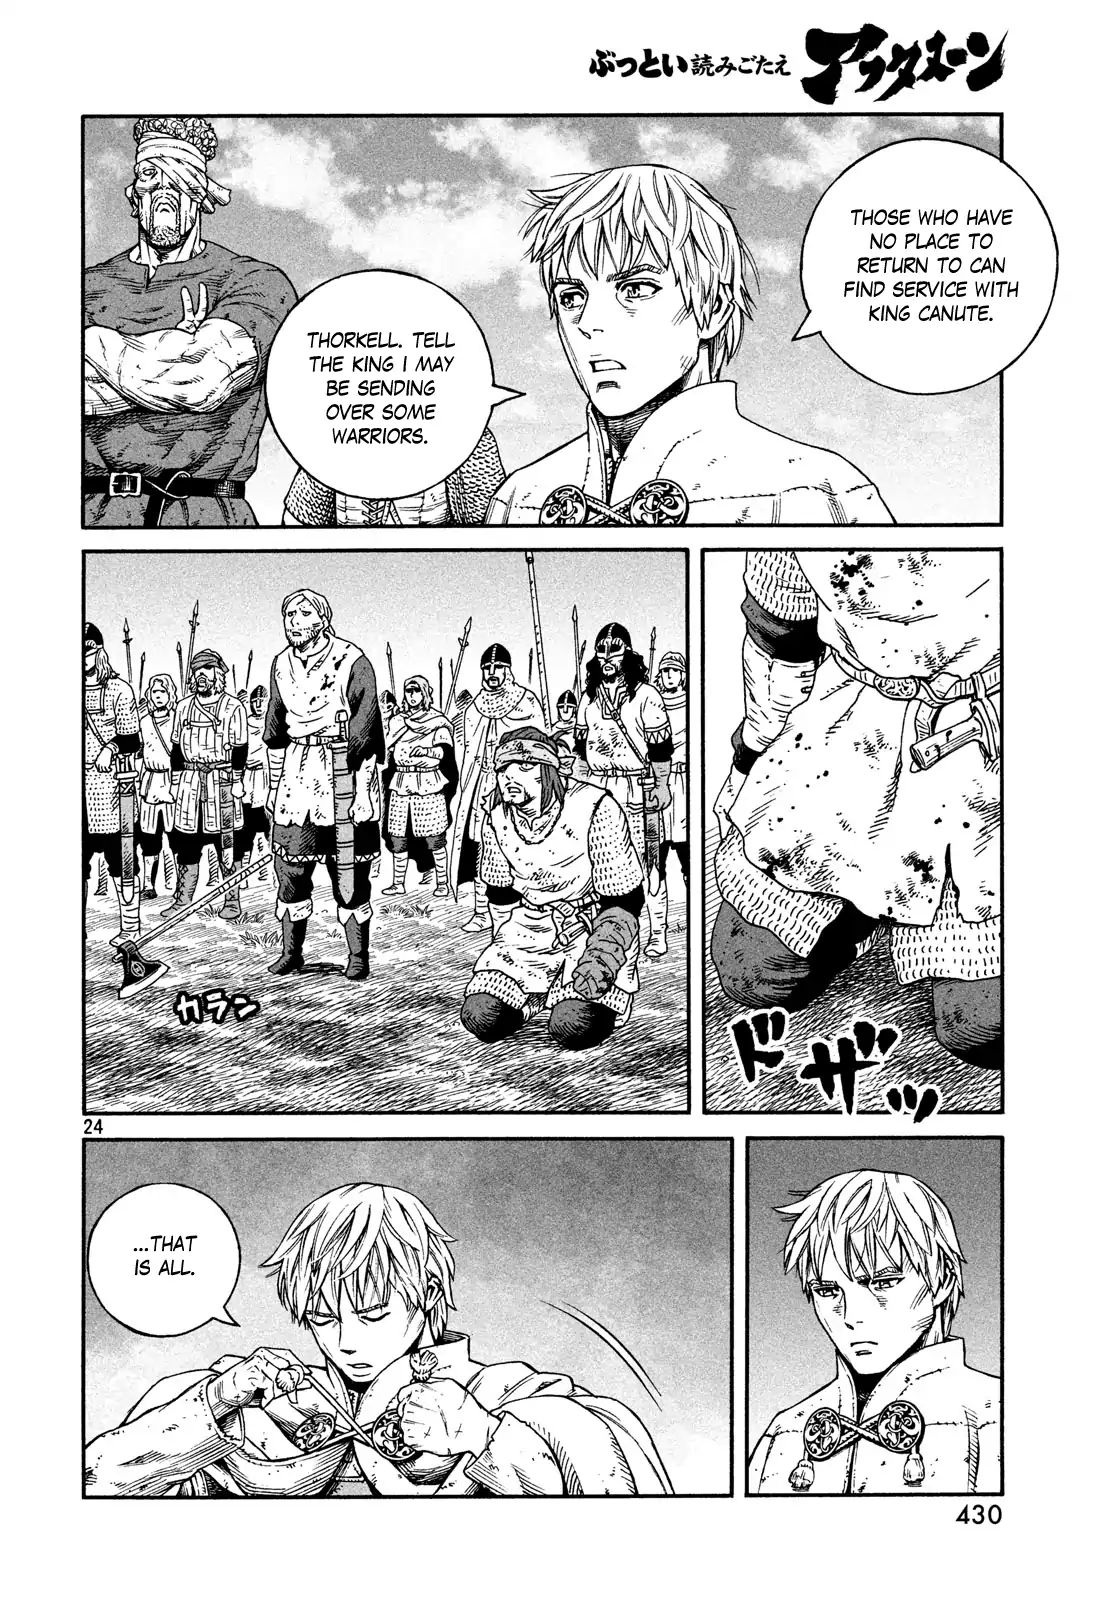 Vinland Saga Manga Manga Chapter - 159 - image 24